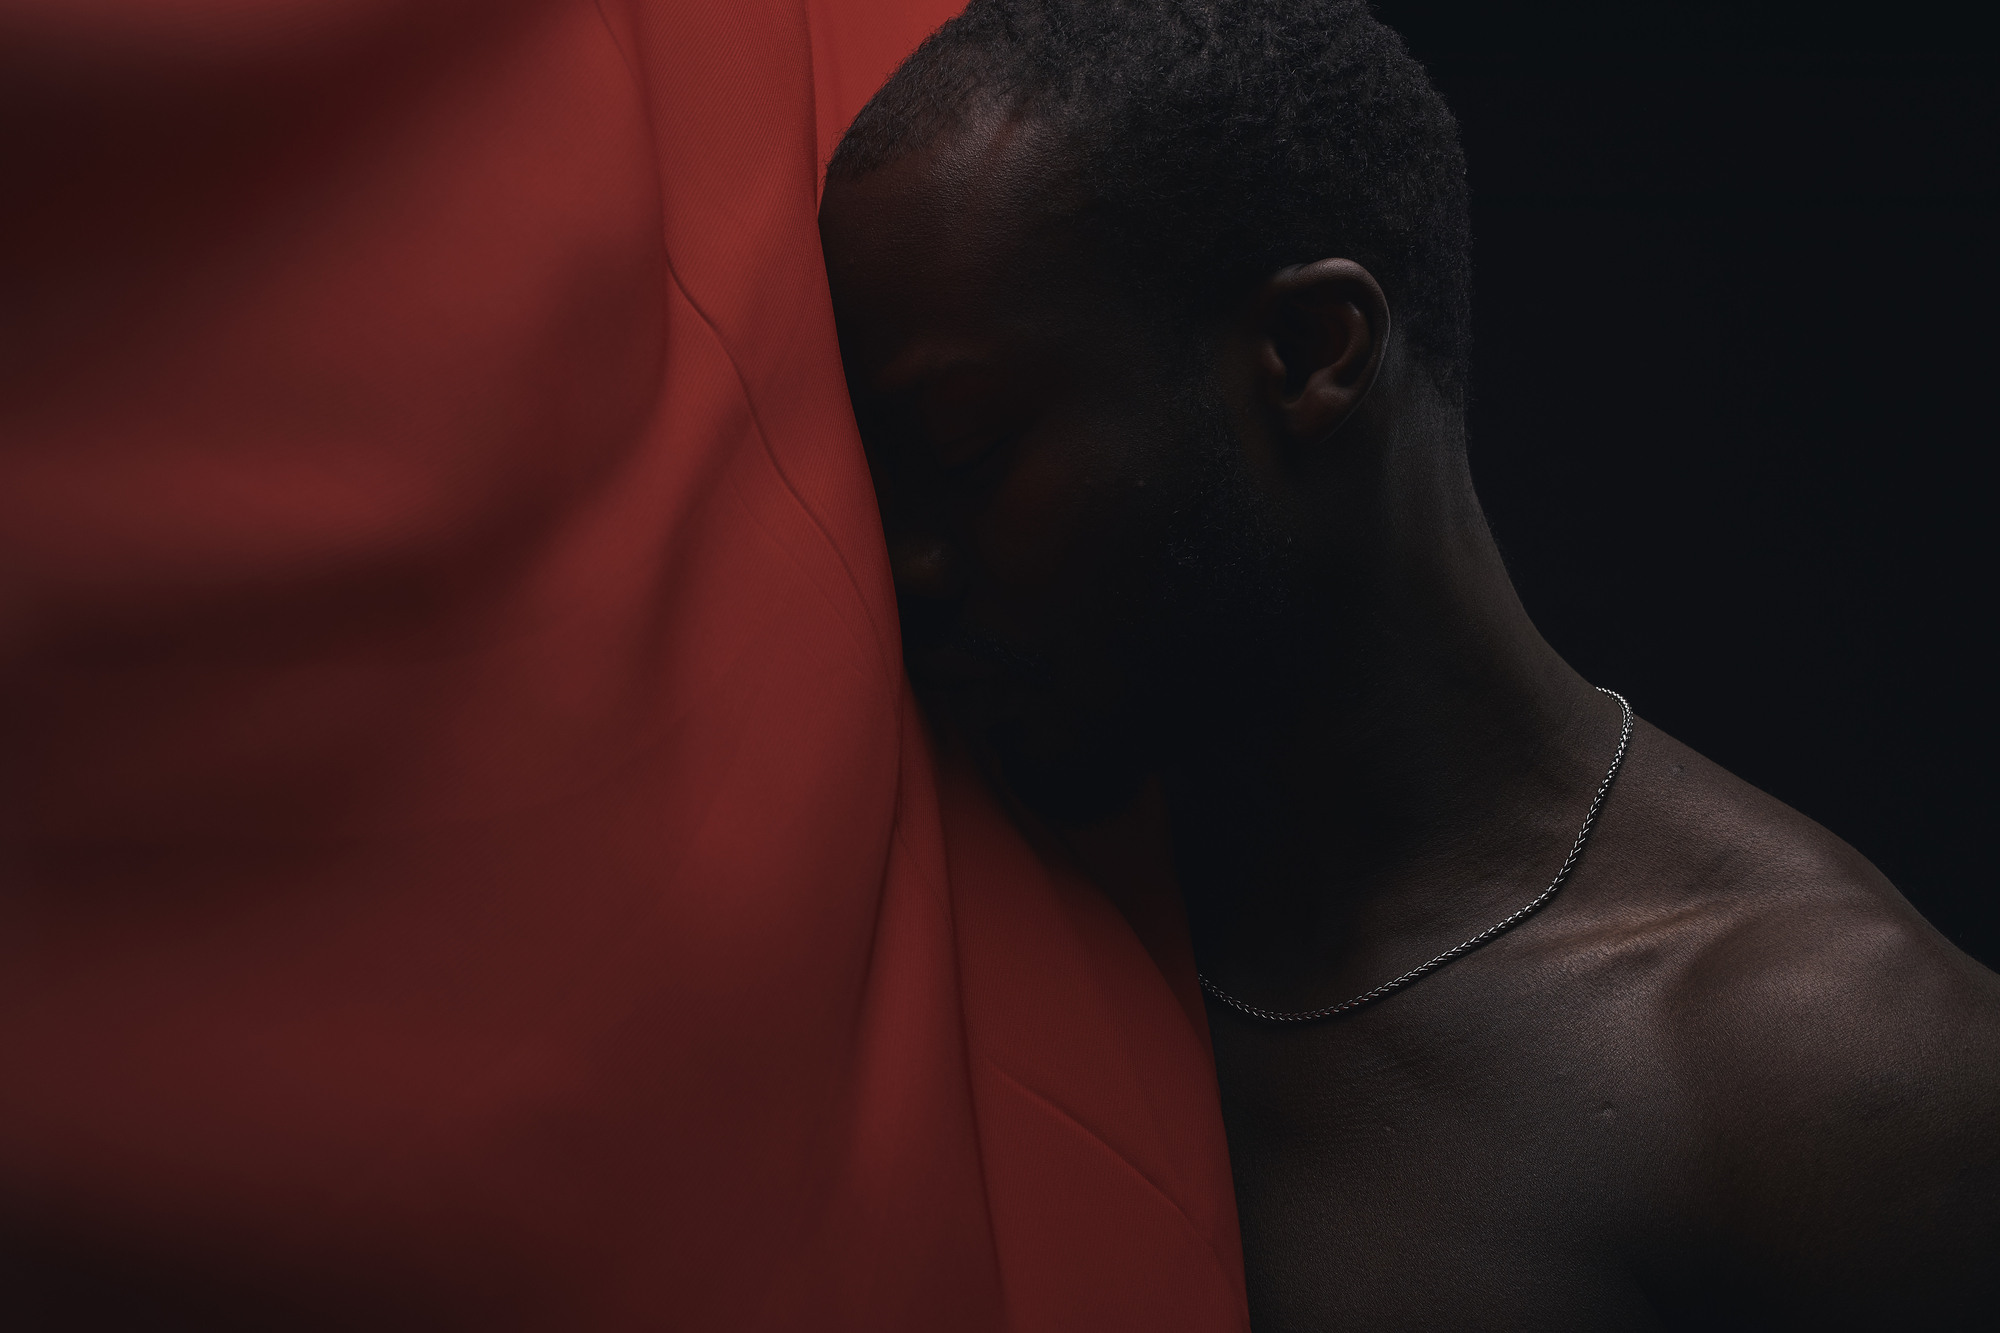 Art portrait of afro man. Man's head behind red fabric, black background. Dark key. Sensual